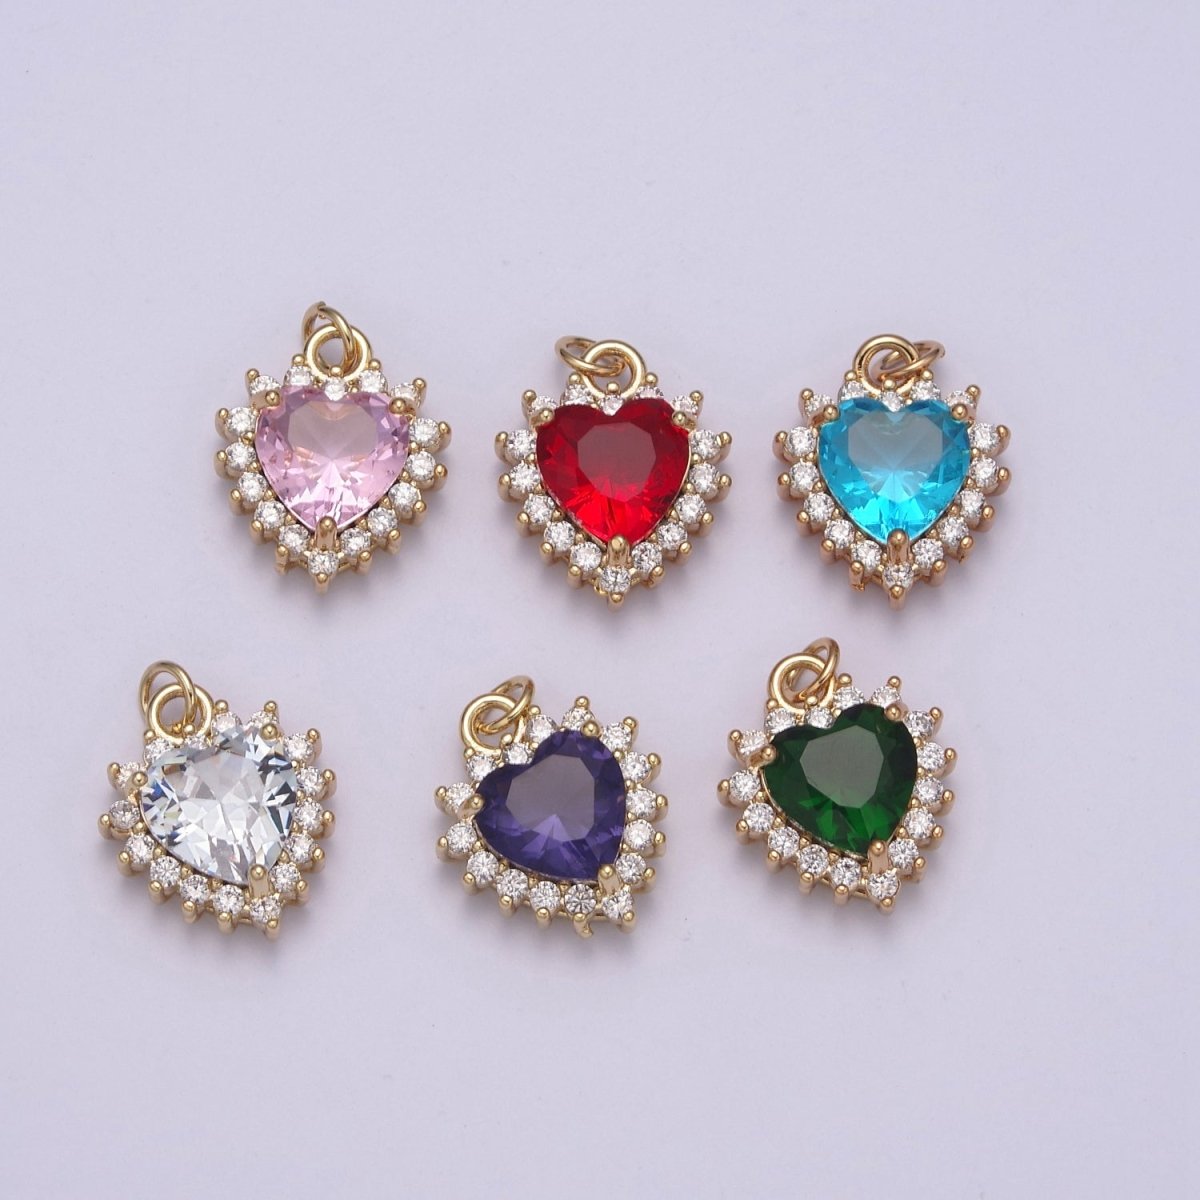 Dainty Cz Crystal Heart Shape Charm Pendant, Cubic Zirconia Crystal Heart Shape Jewelry Pendant Charm Wholesale N-289 - N-294 - DLUXCA